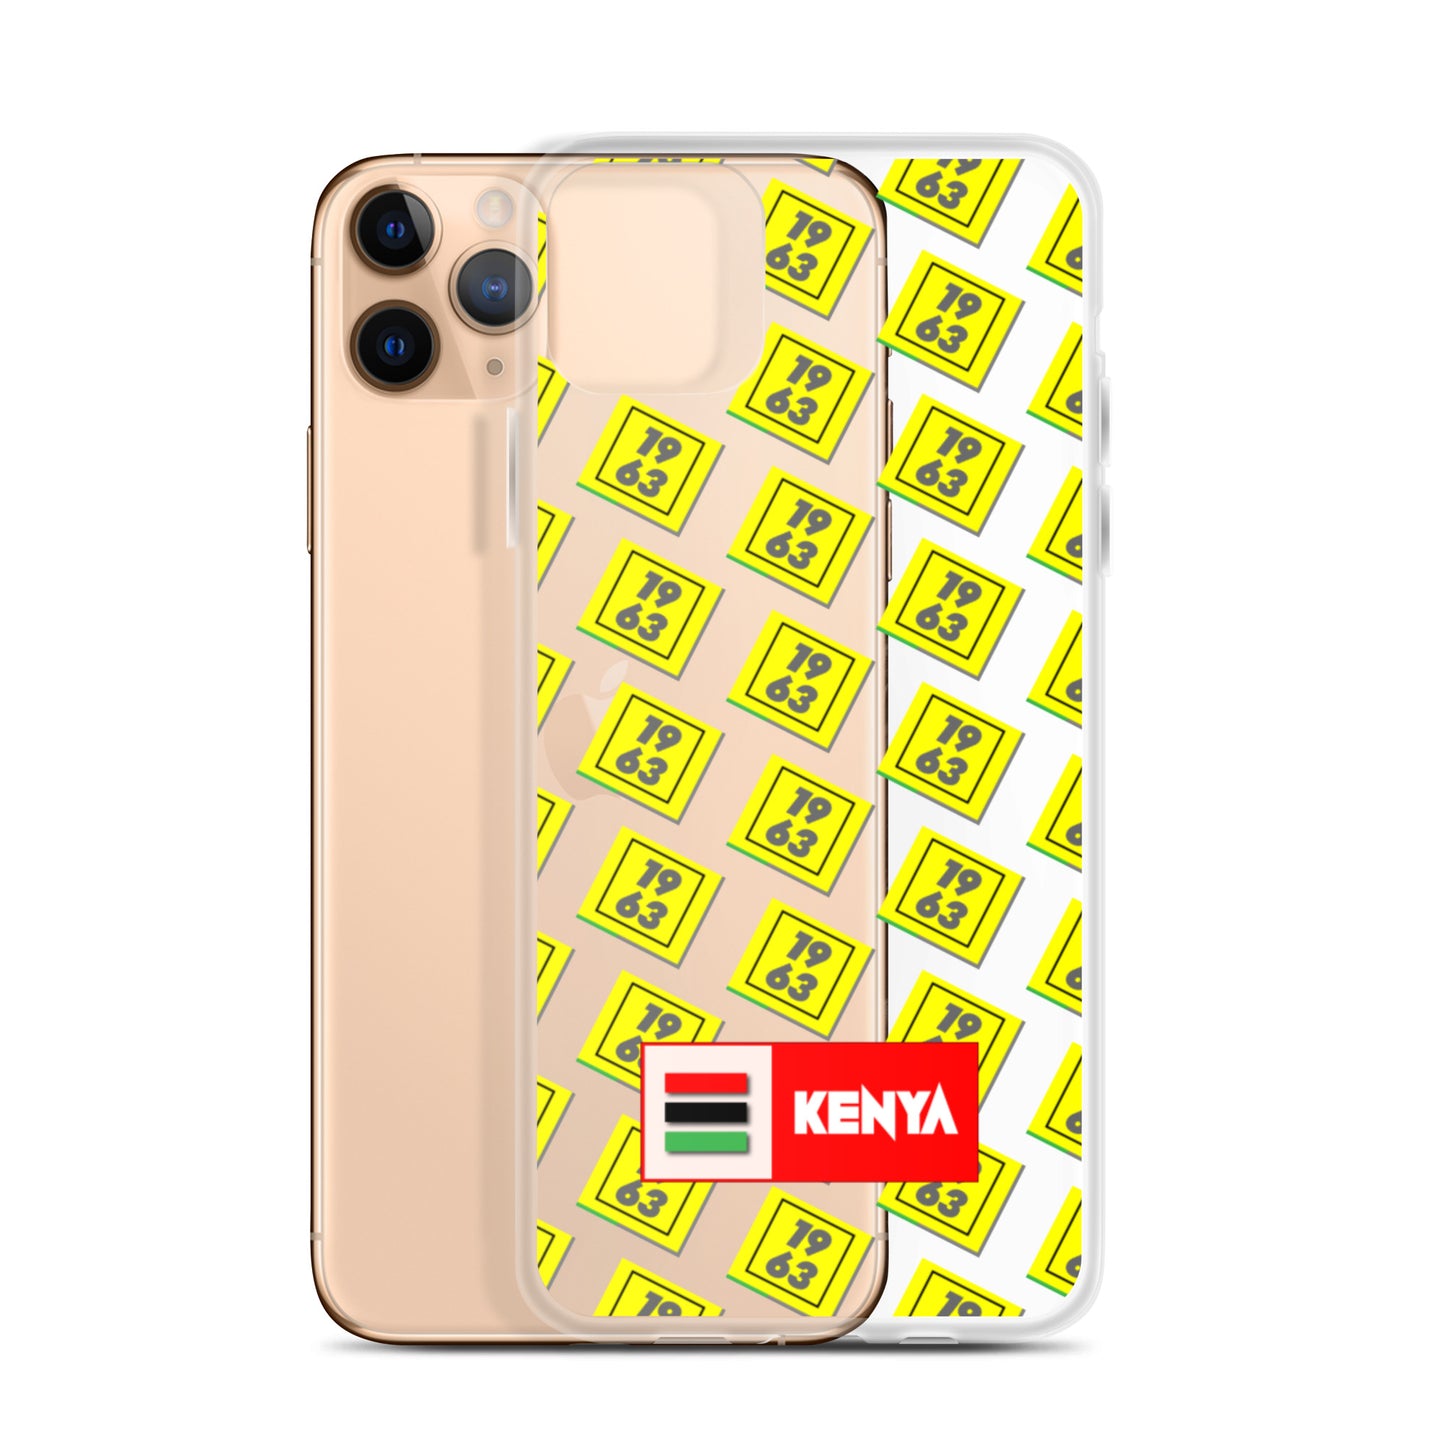 Kenya iPhone Case